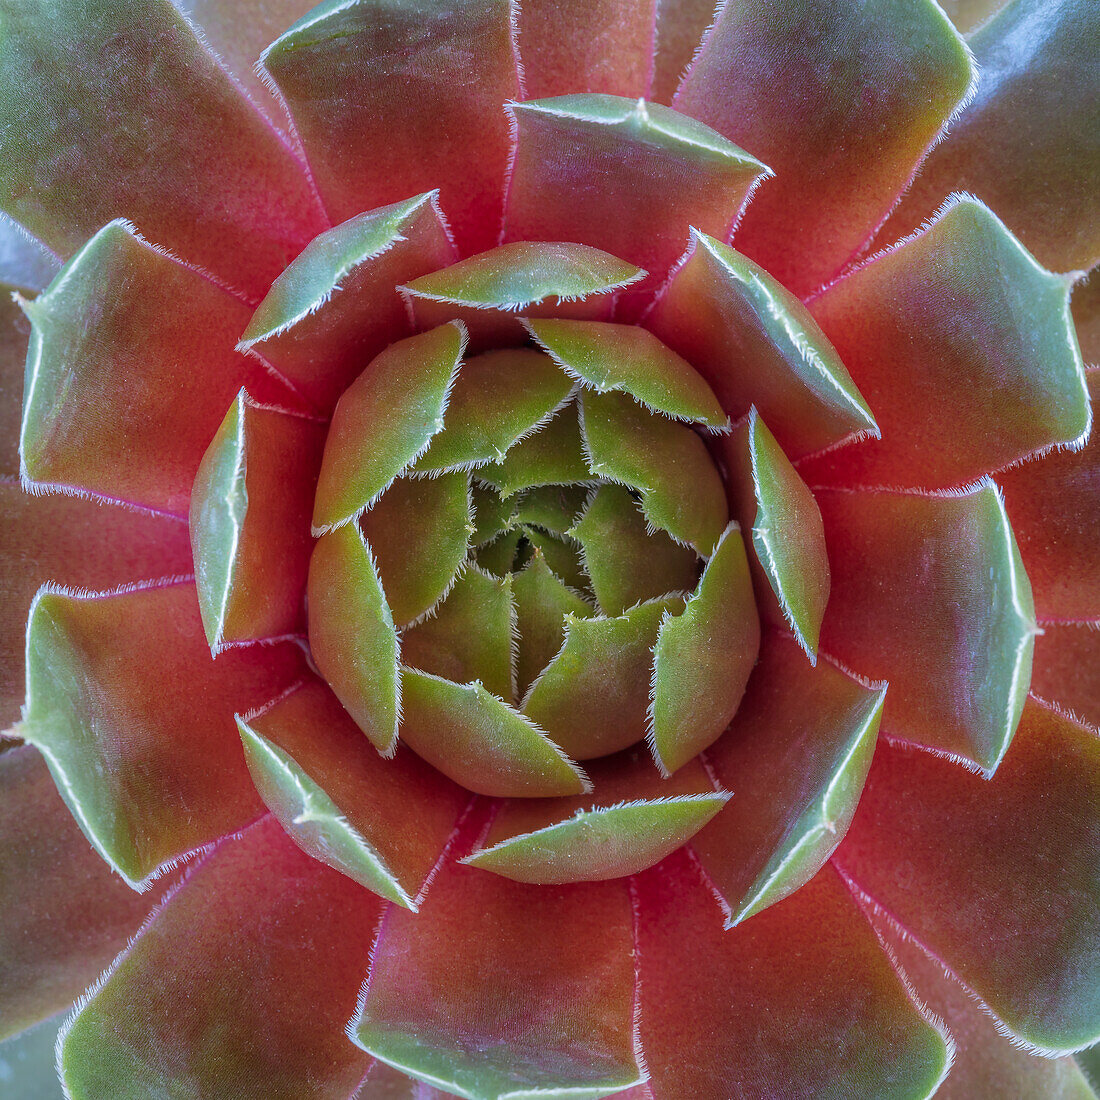 USA, Washington State, Seabeck. Close-up of sempervivum ruby heart plant.